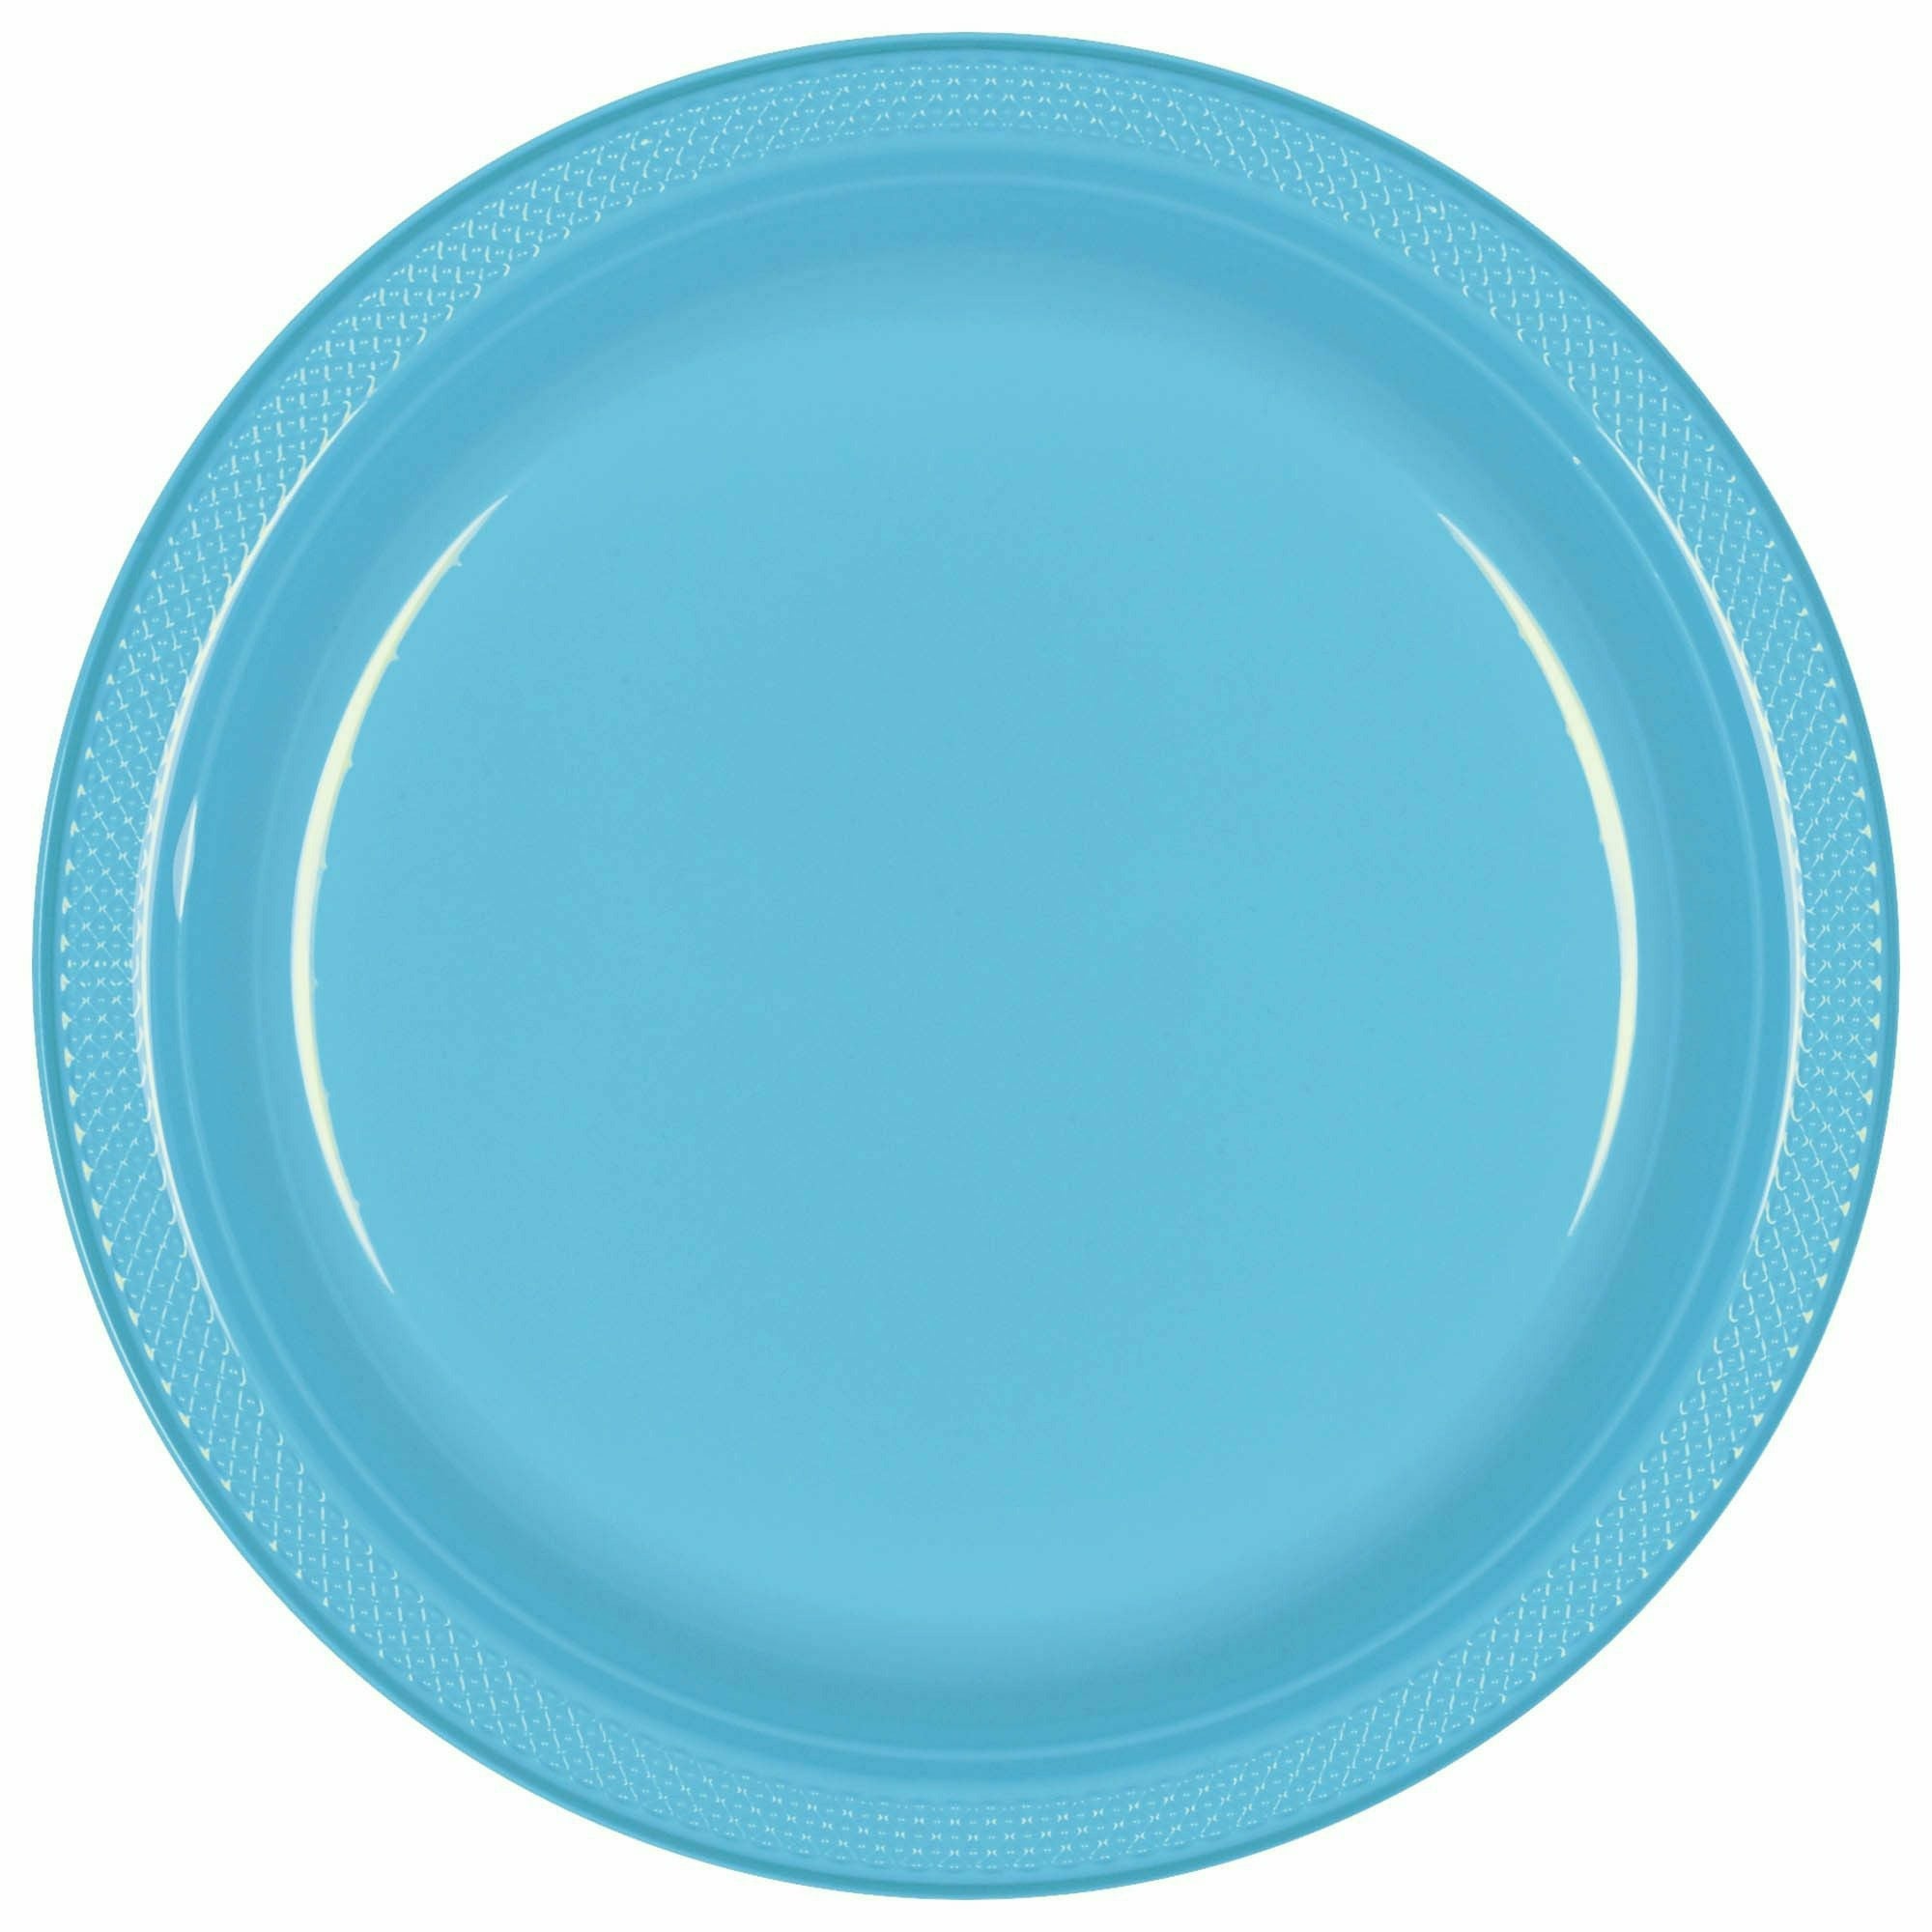 Amscan BASIC Caribbean Blue Plastic Plates